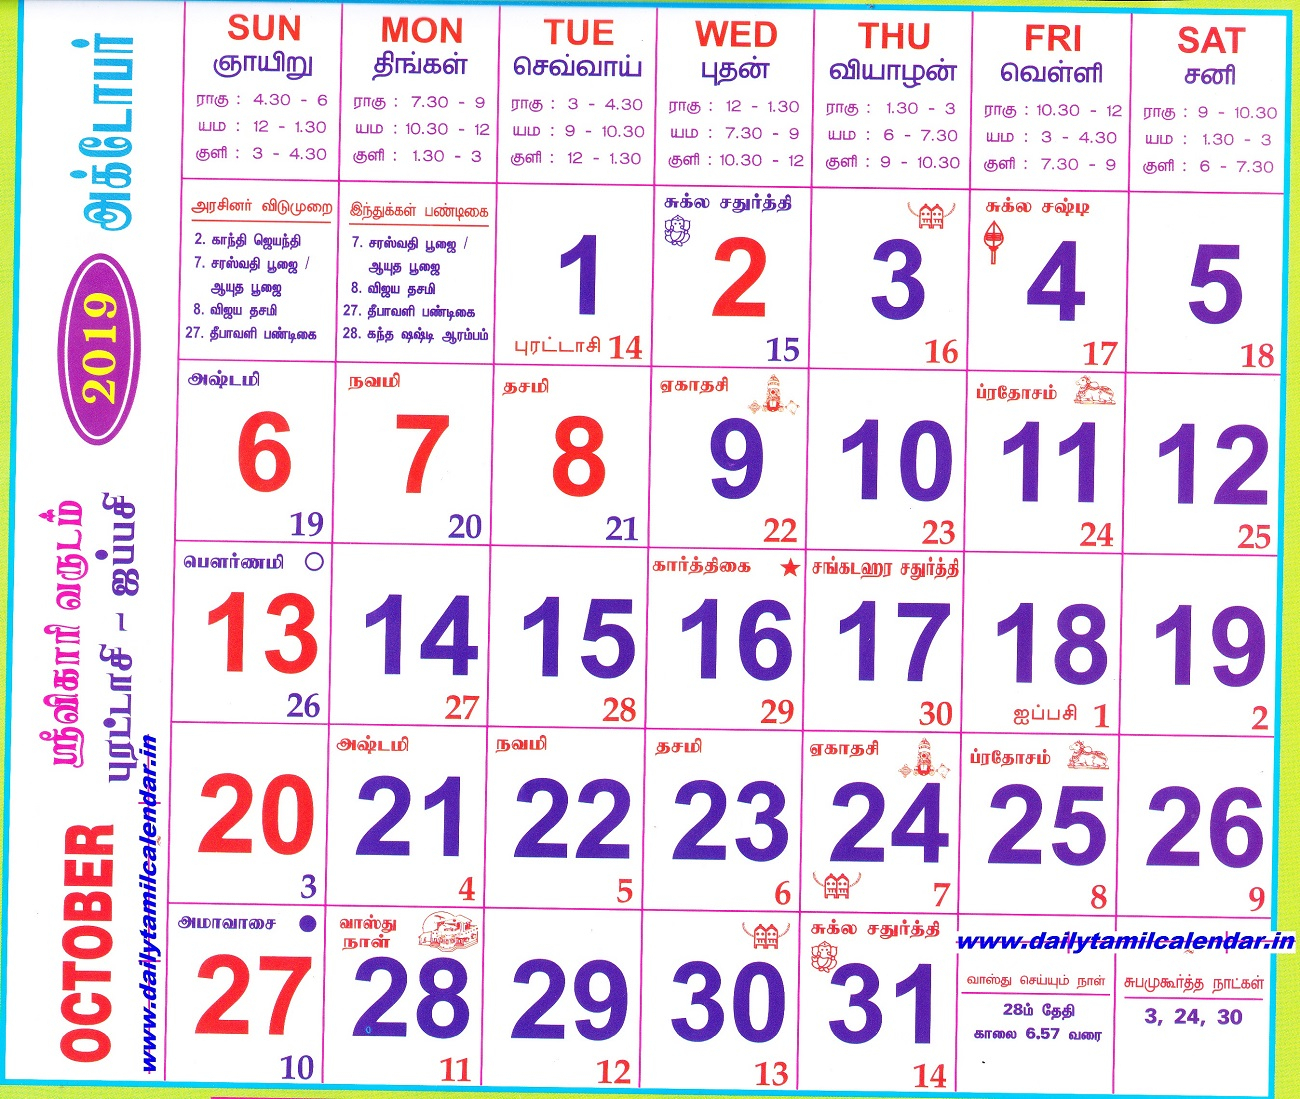 October 2019 Monthly Tamil Calendar | Tamil Calendar 2022 - Tamil Daily Calendar 2022